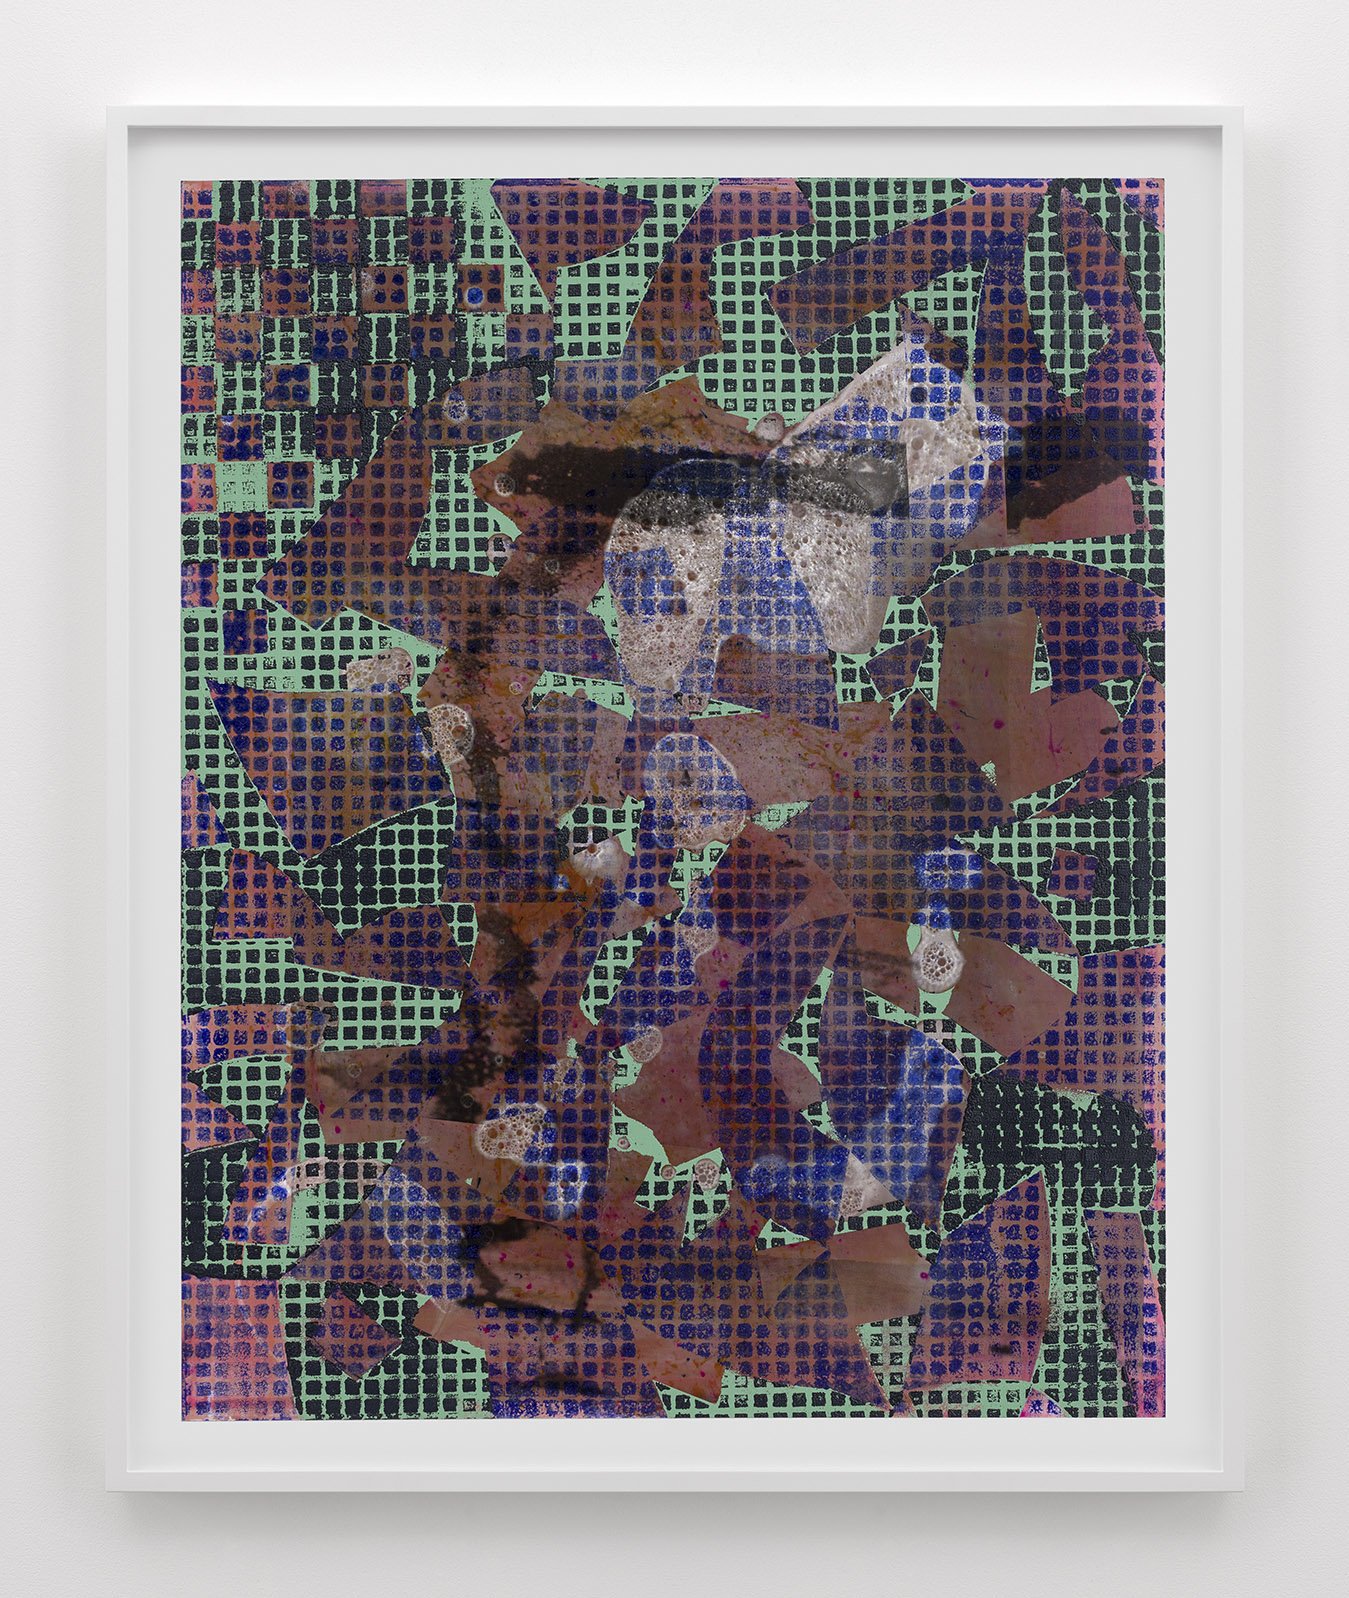  Untitled, 2021,Dye, oil and bleach on photogram, 50.6 x 40.6 cm 